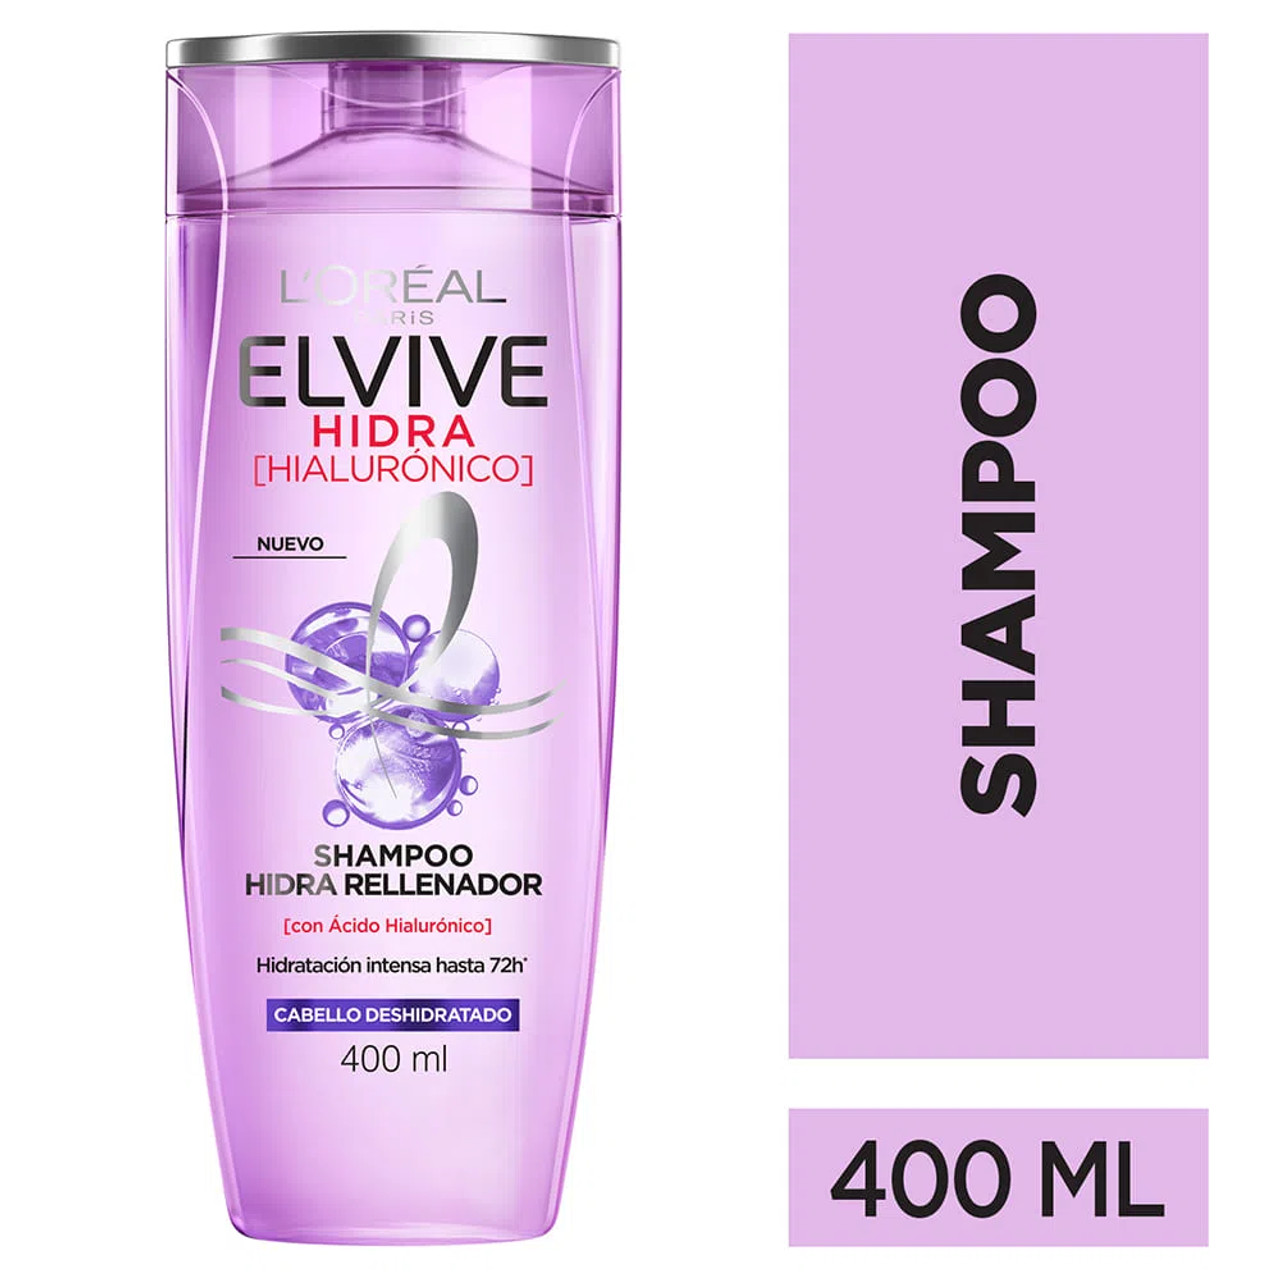 Elvive L'Oréal Shampoo Hidra Hialurónico Shampoo with Hyaluronic Acid, 400  ml / 13.52 fl oz bottle